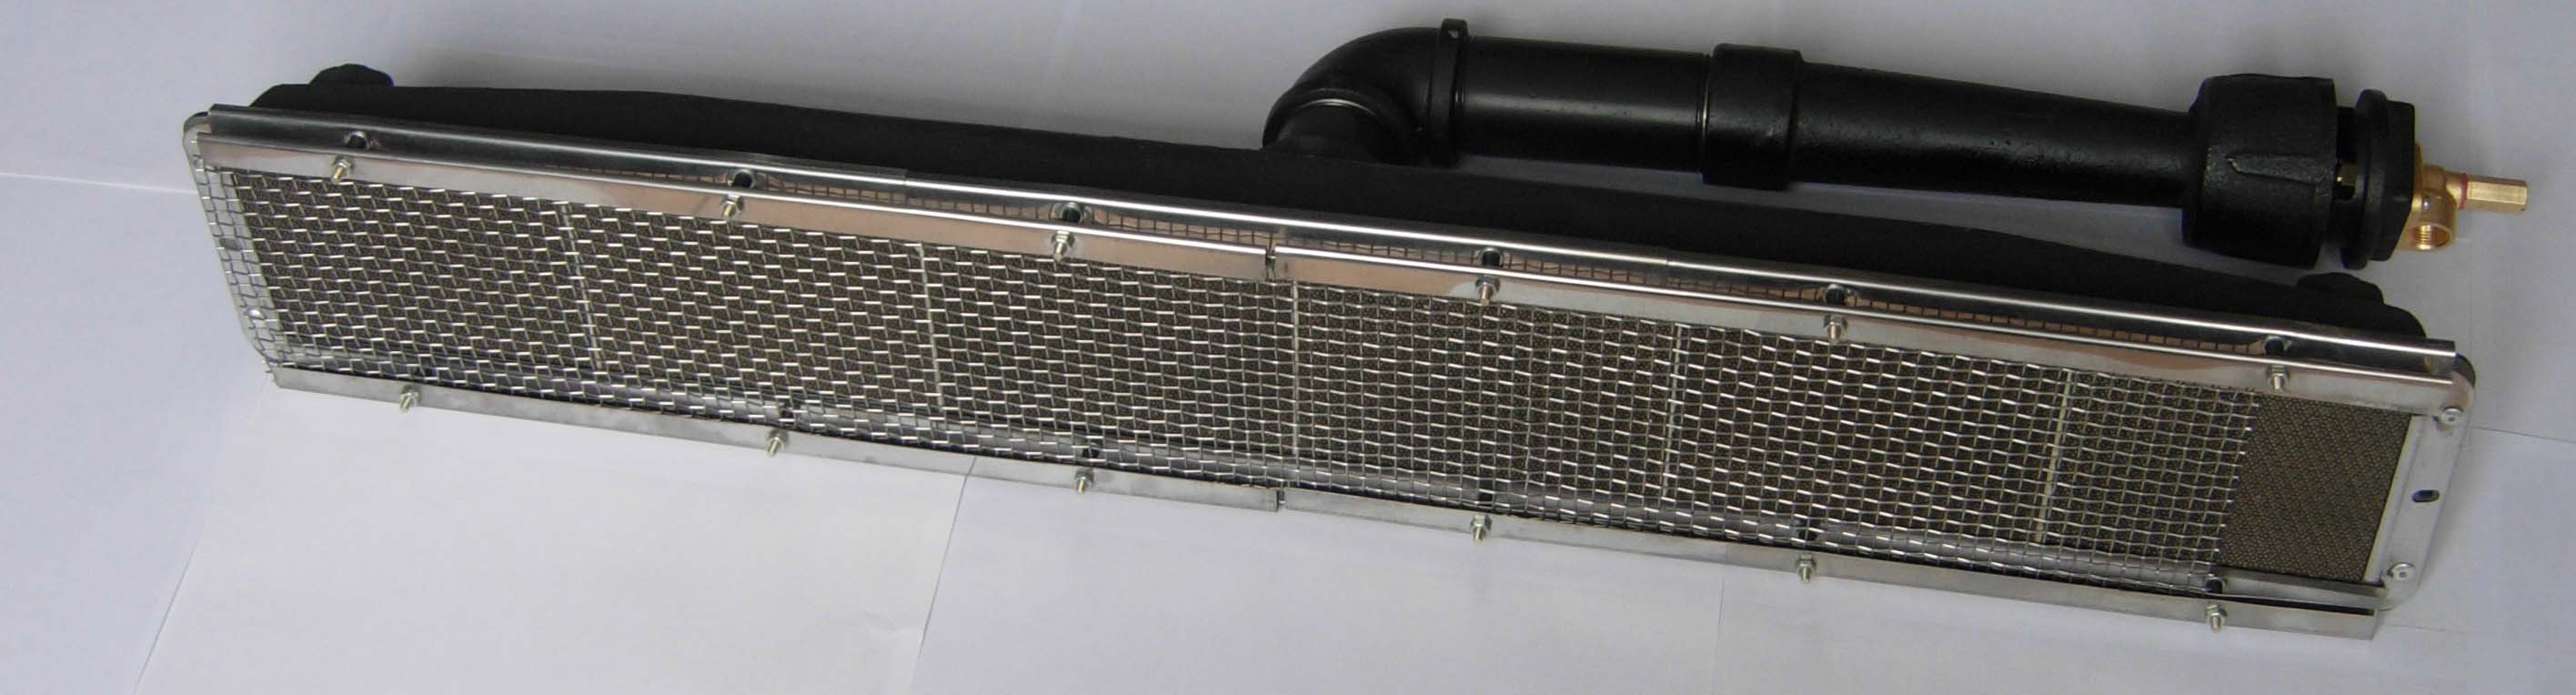 Heat treatments ovens parts Industrial lpg burners